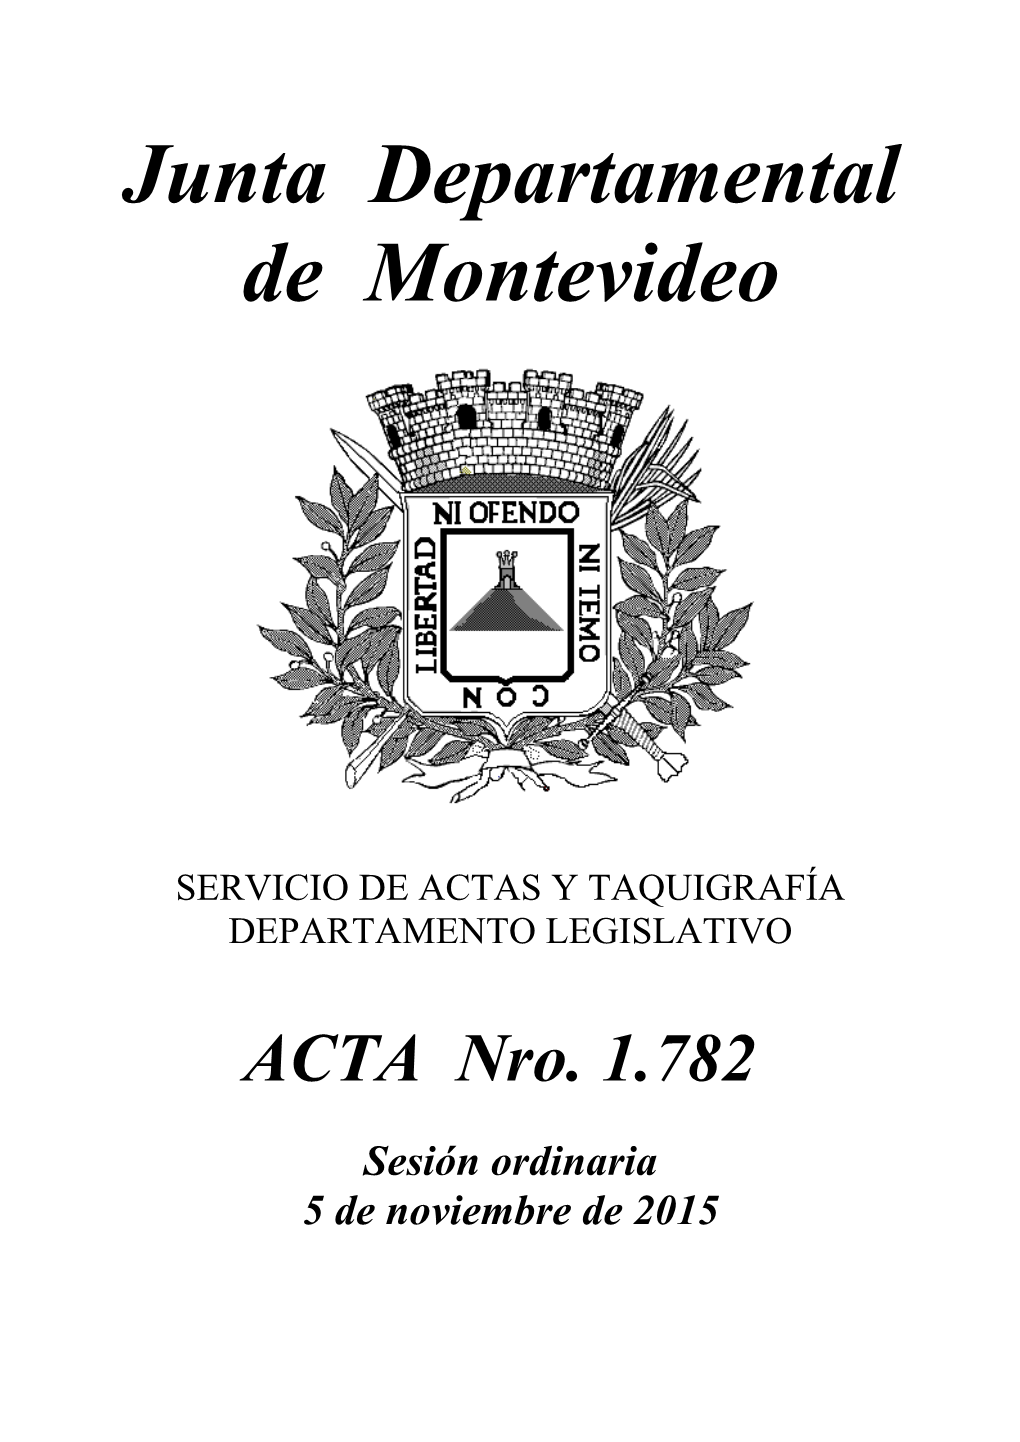 ACTA Nro. 1.782